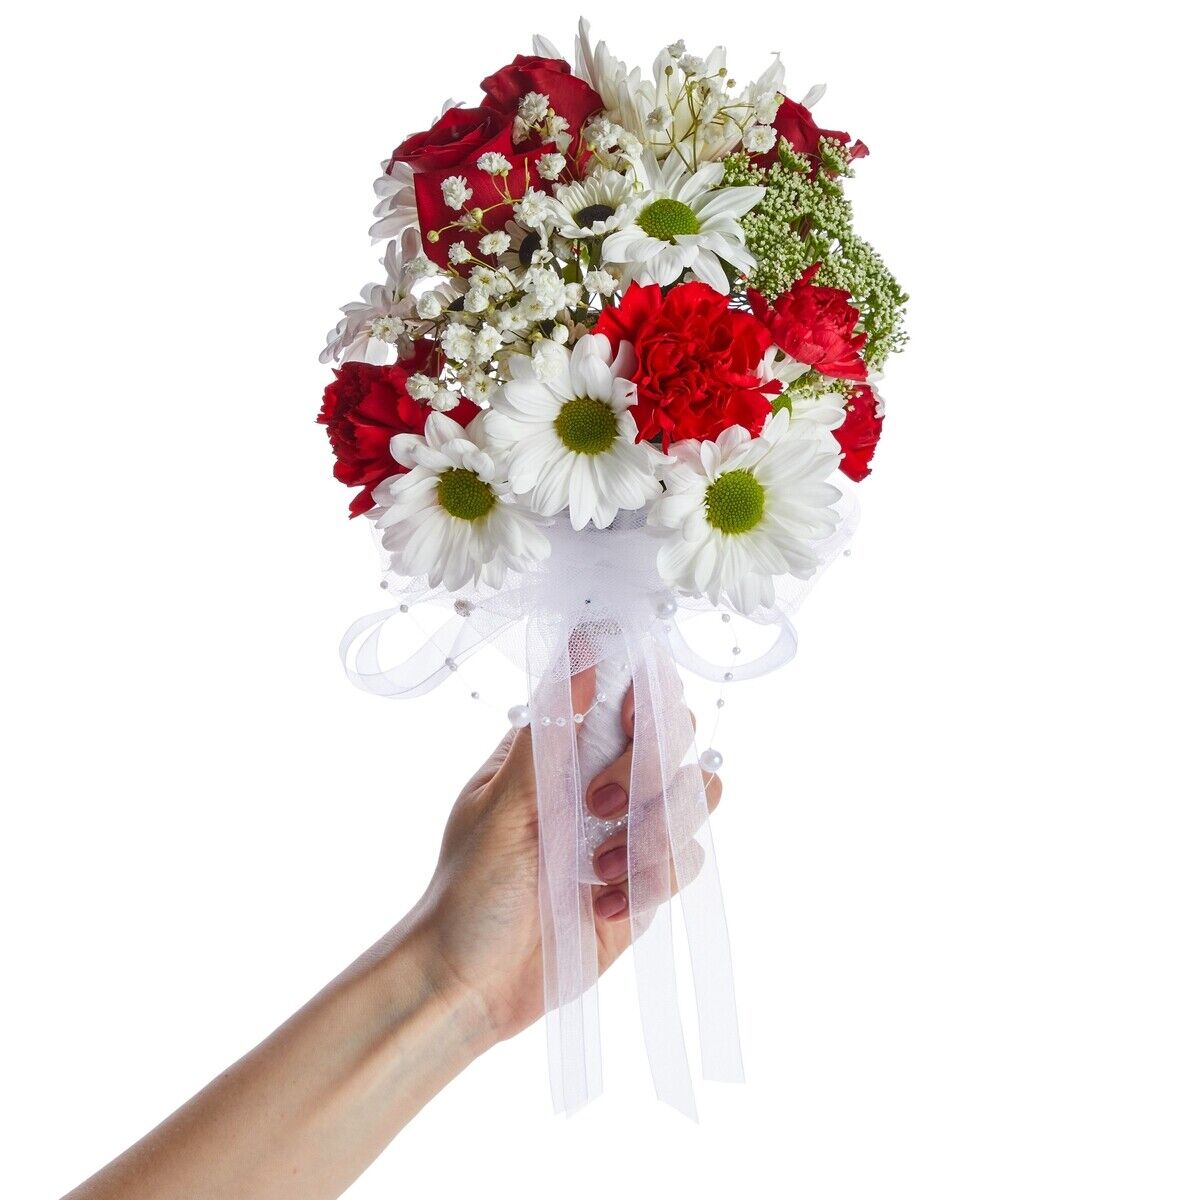 3x7 Inches Arranged Artificial Foam Wedding Flower Bouquet